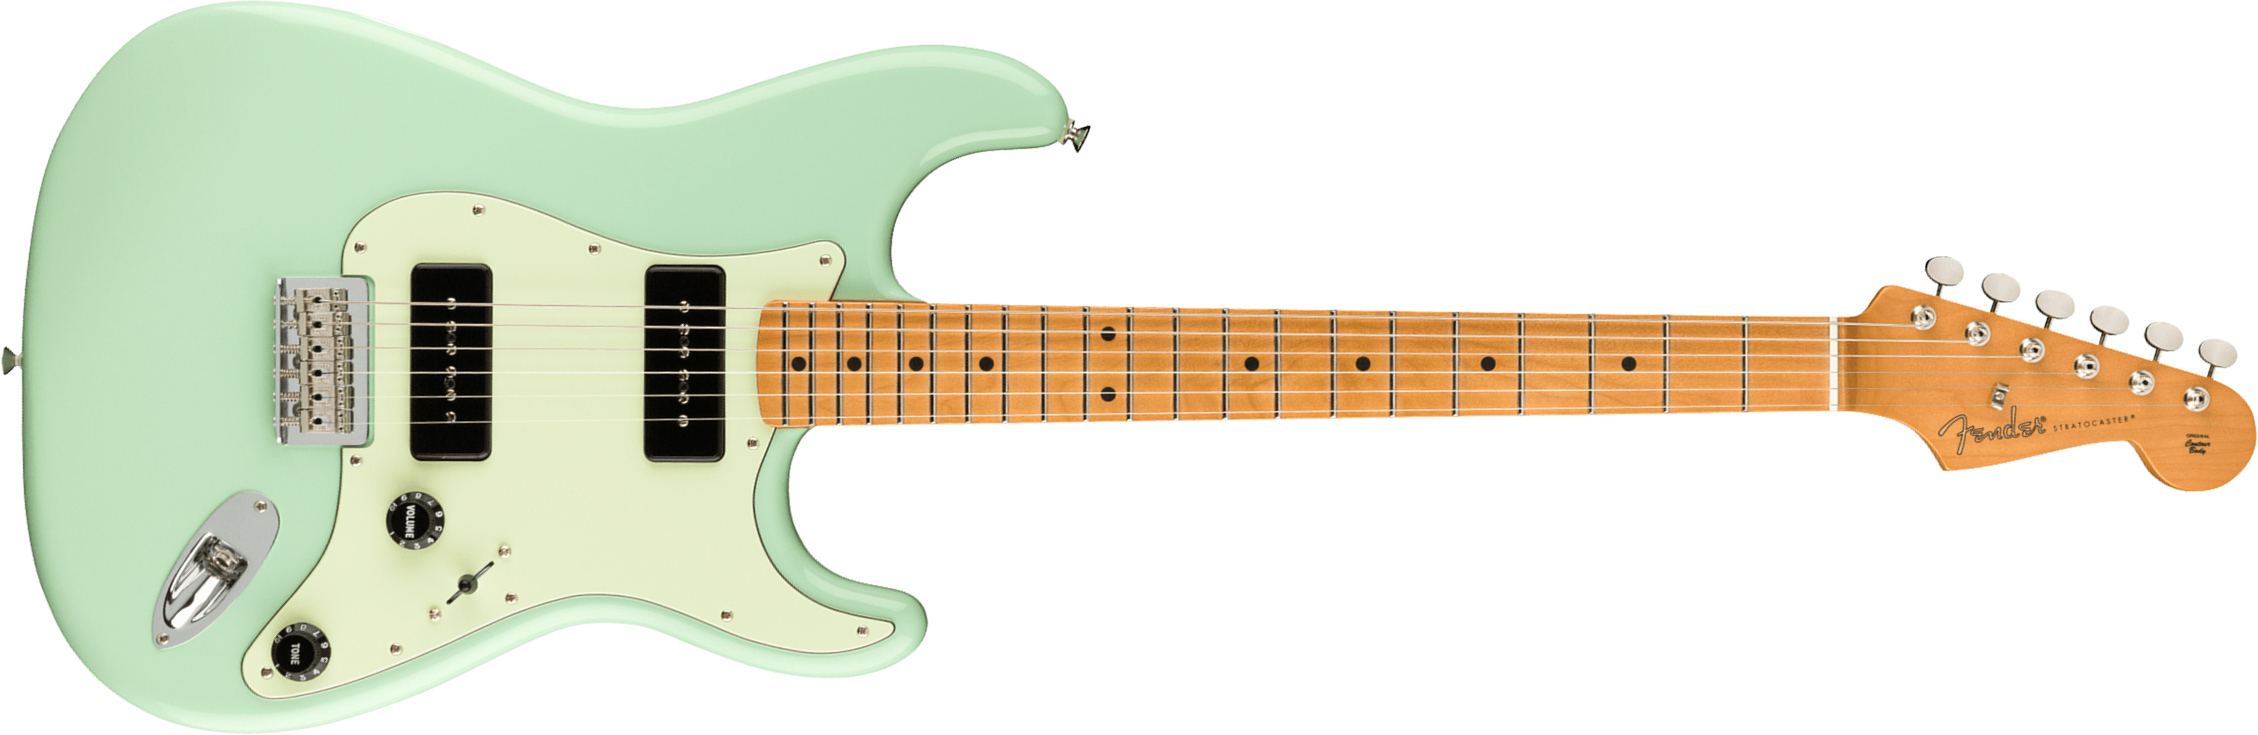 Fender Strat Noventa Mex Ss Ht Mn +housse - Surf Green - Guitarra eléctrica con forma de str. - Main picture